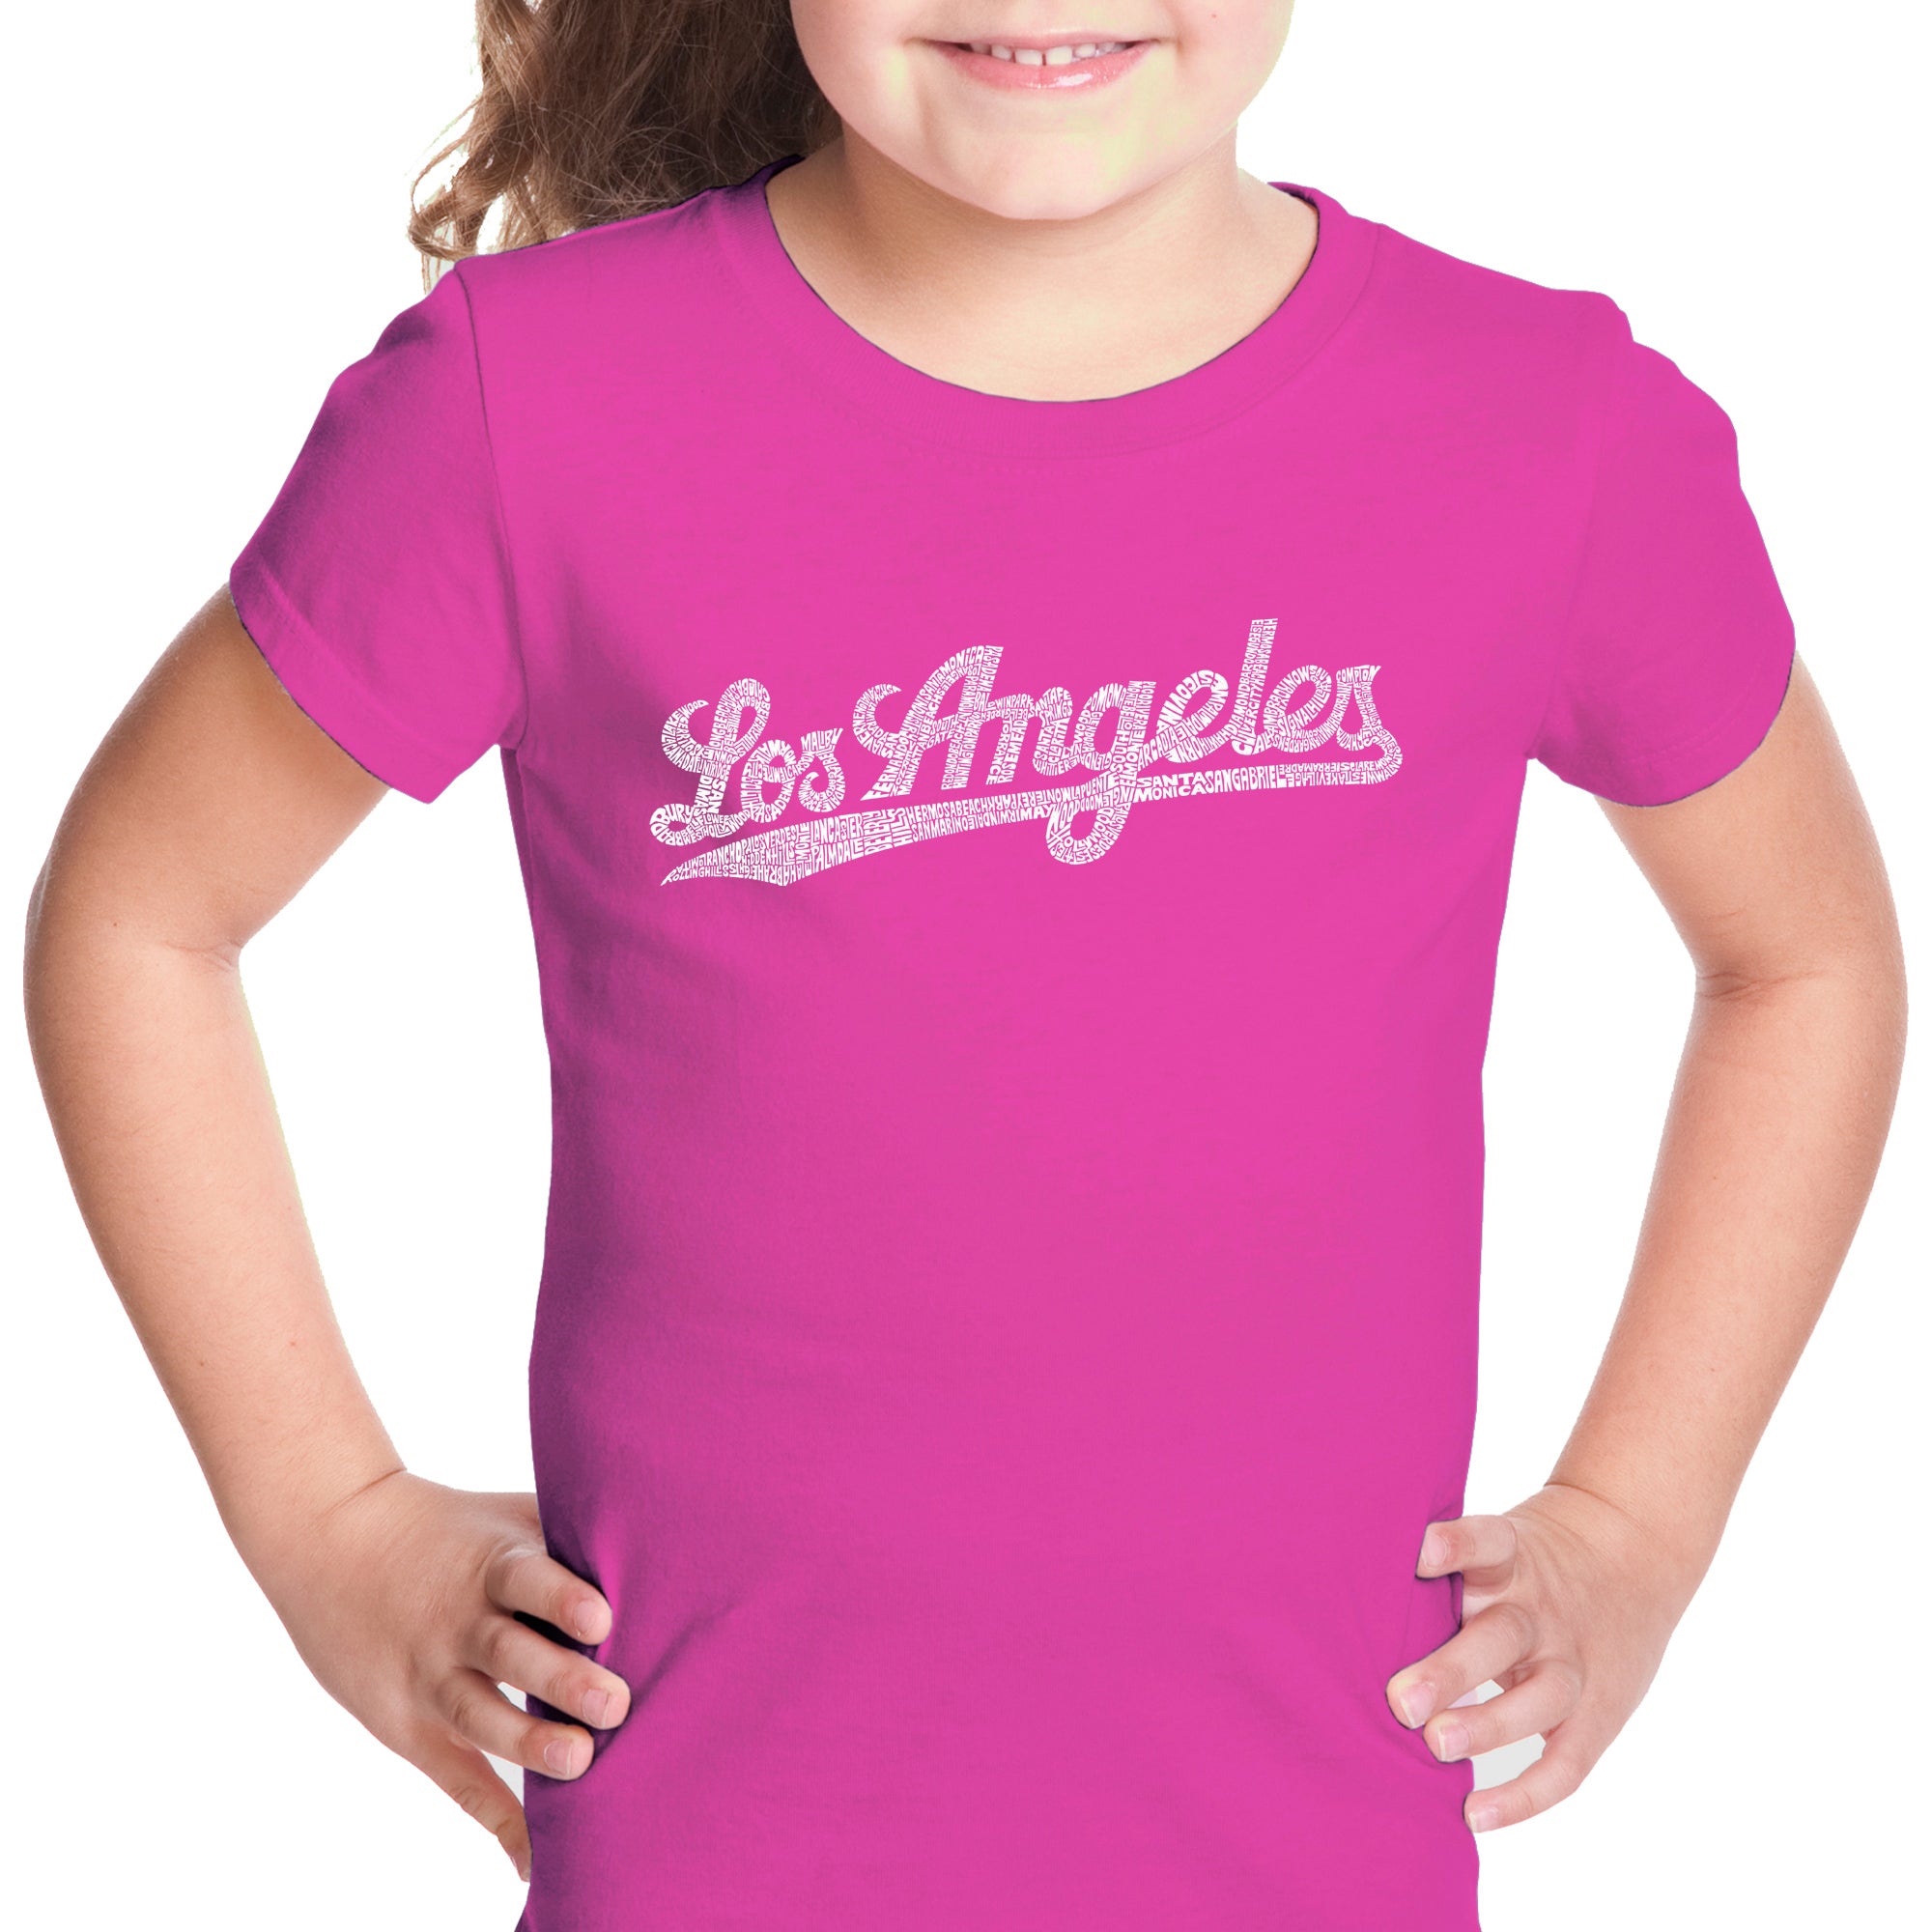 Los Angeles Neighborhoods - Girl's Word Art T-Shirt XL / Pink